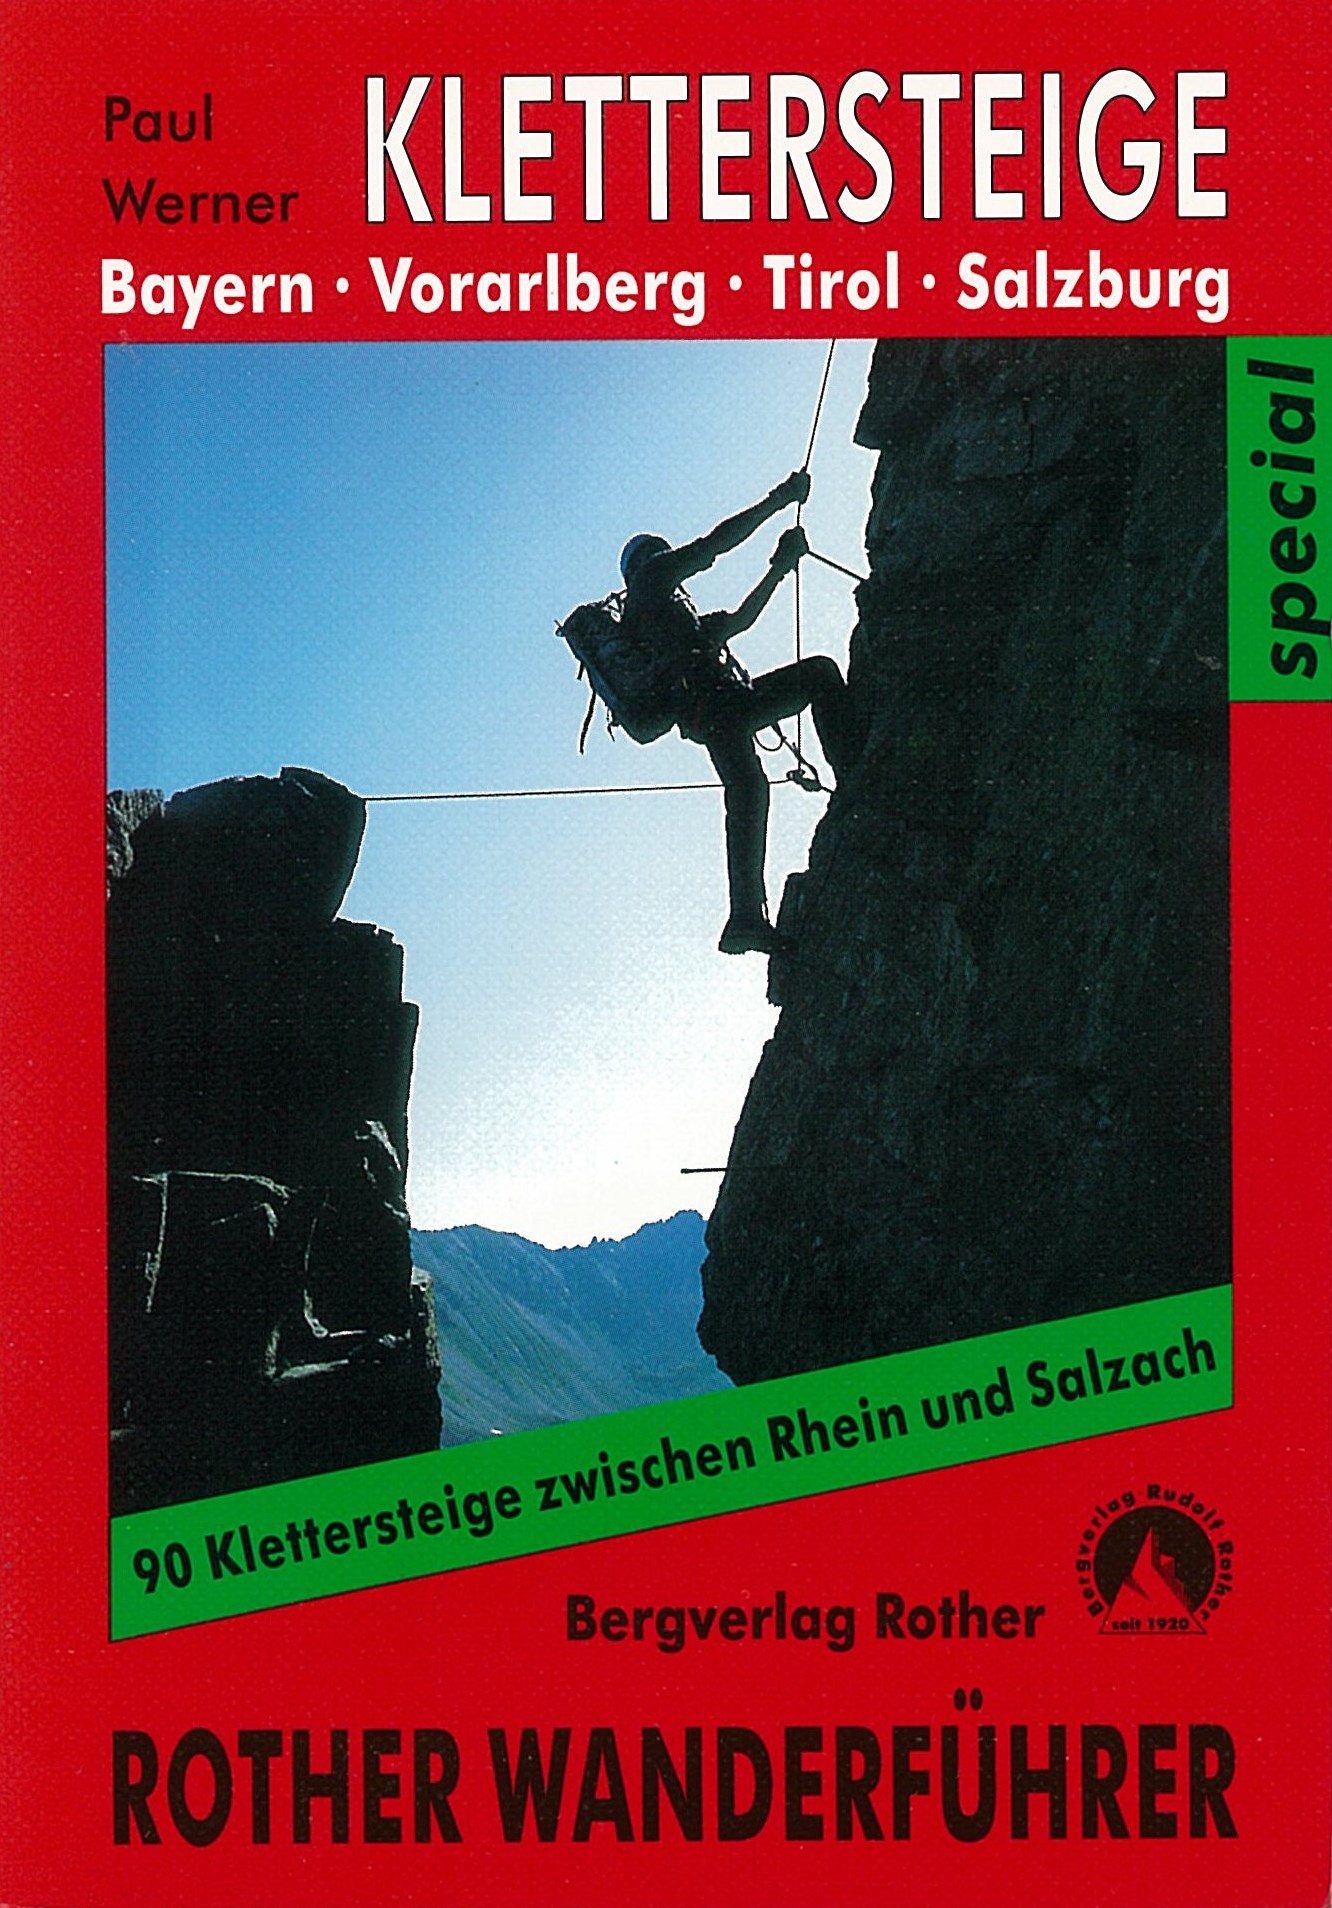 Klettersteige Bayern, Vorarlberg, Tirol, Salzburg Wanderführer Rother / 2004